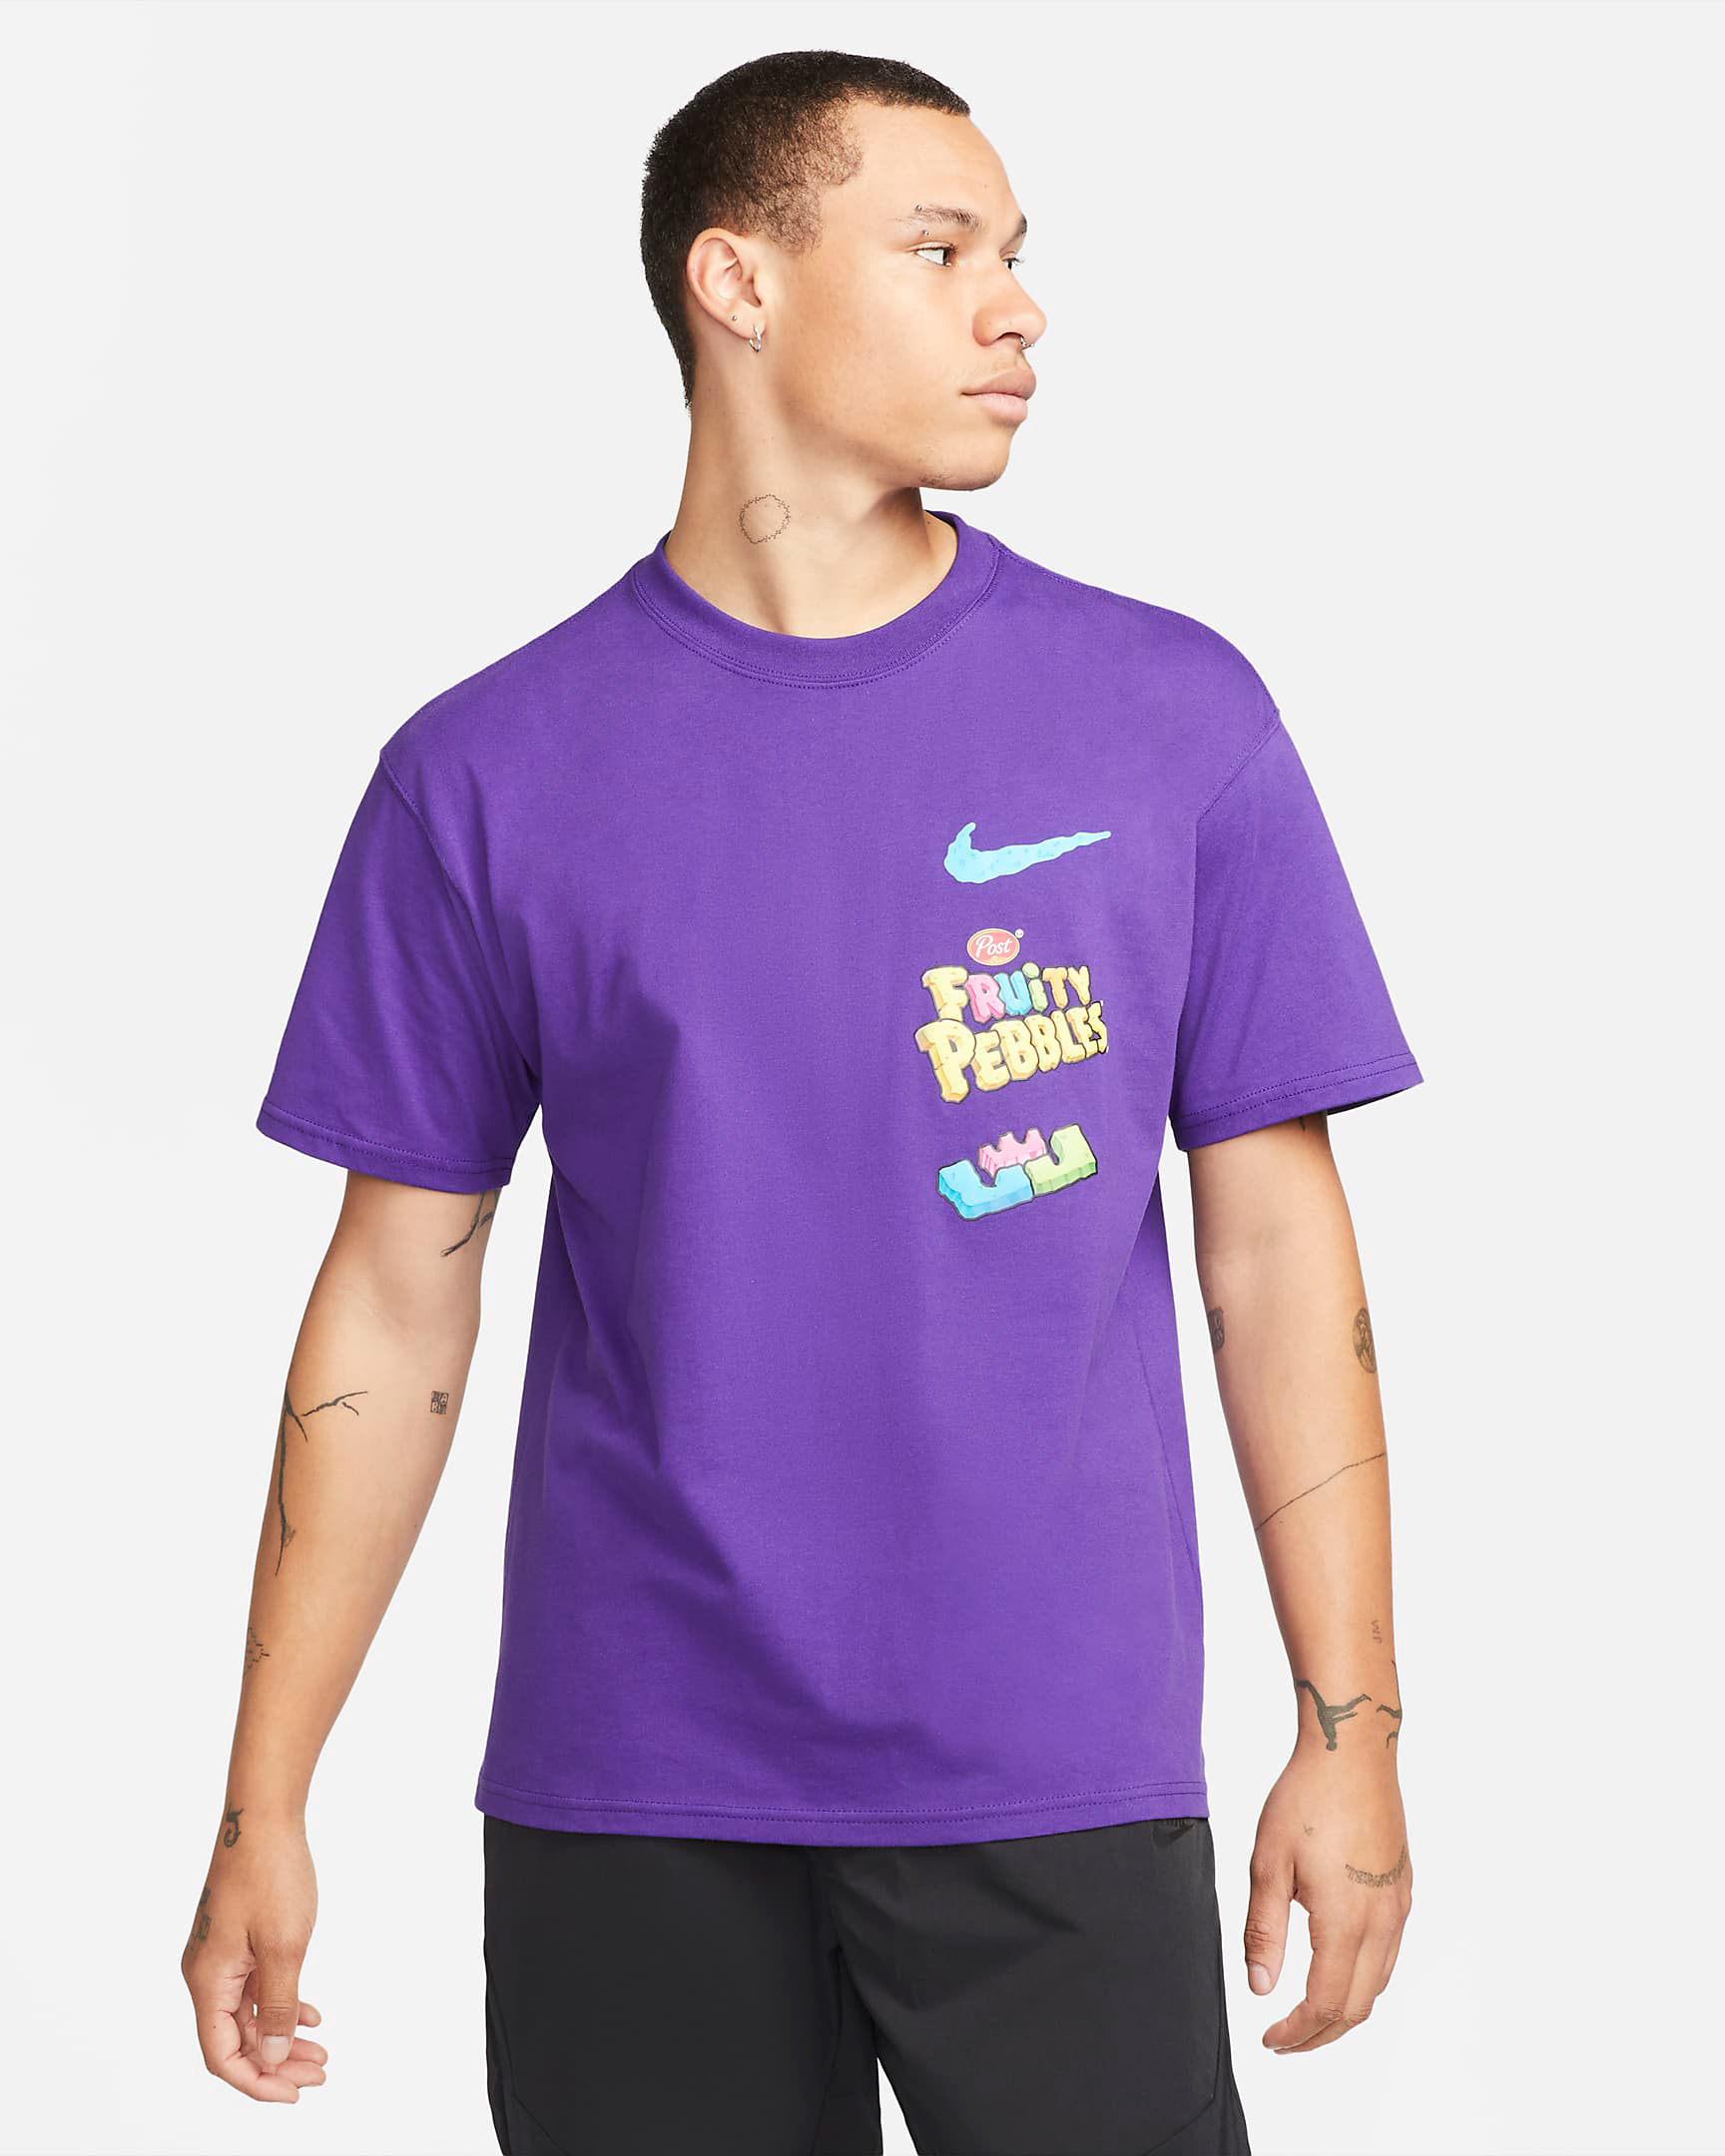 nike-lebron-fruity-pebbles-shirt-court-purple-1